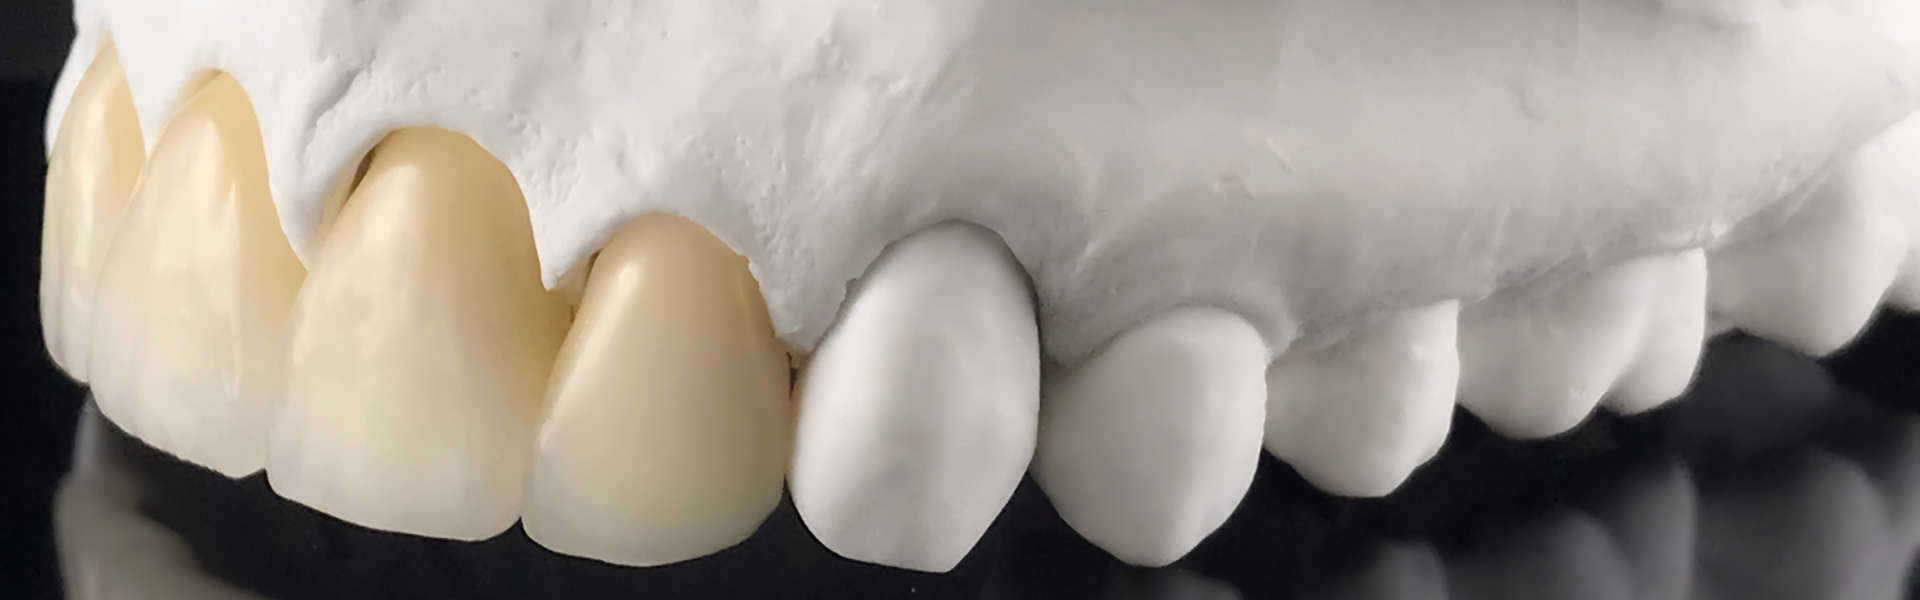 Dental prosthesis porcelain teeth in a mold.